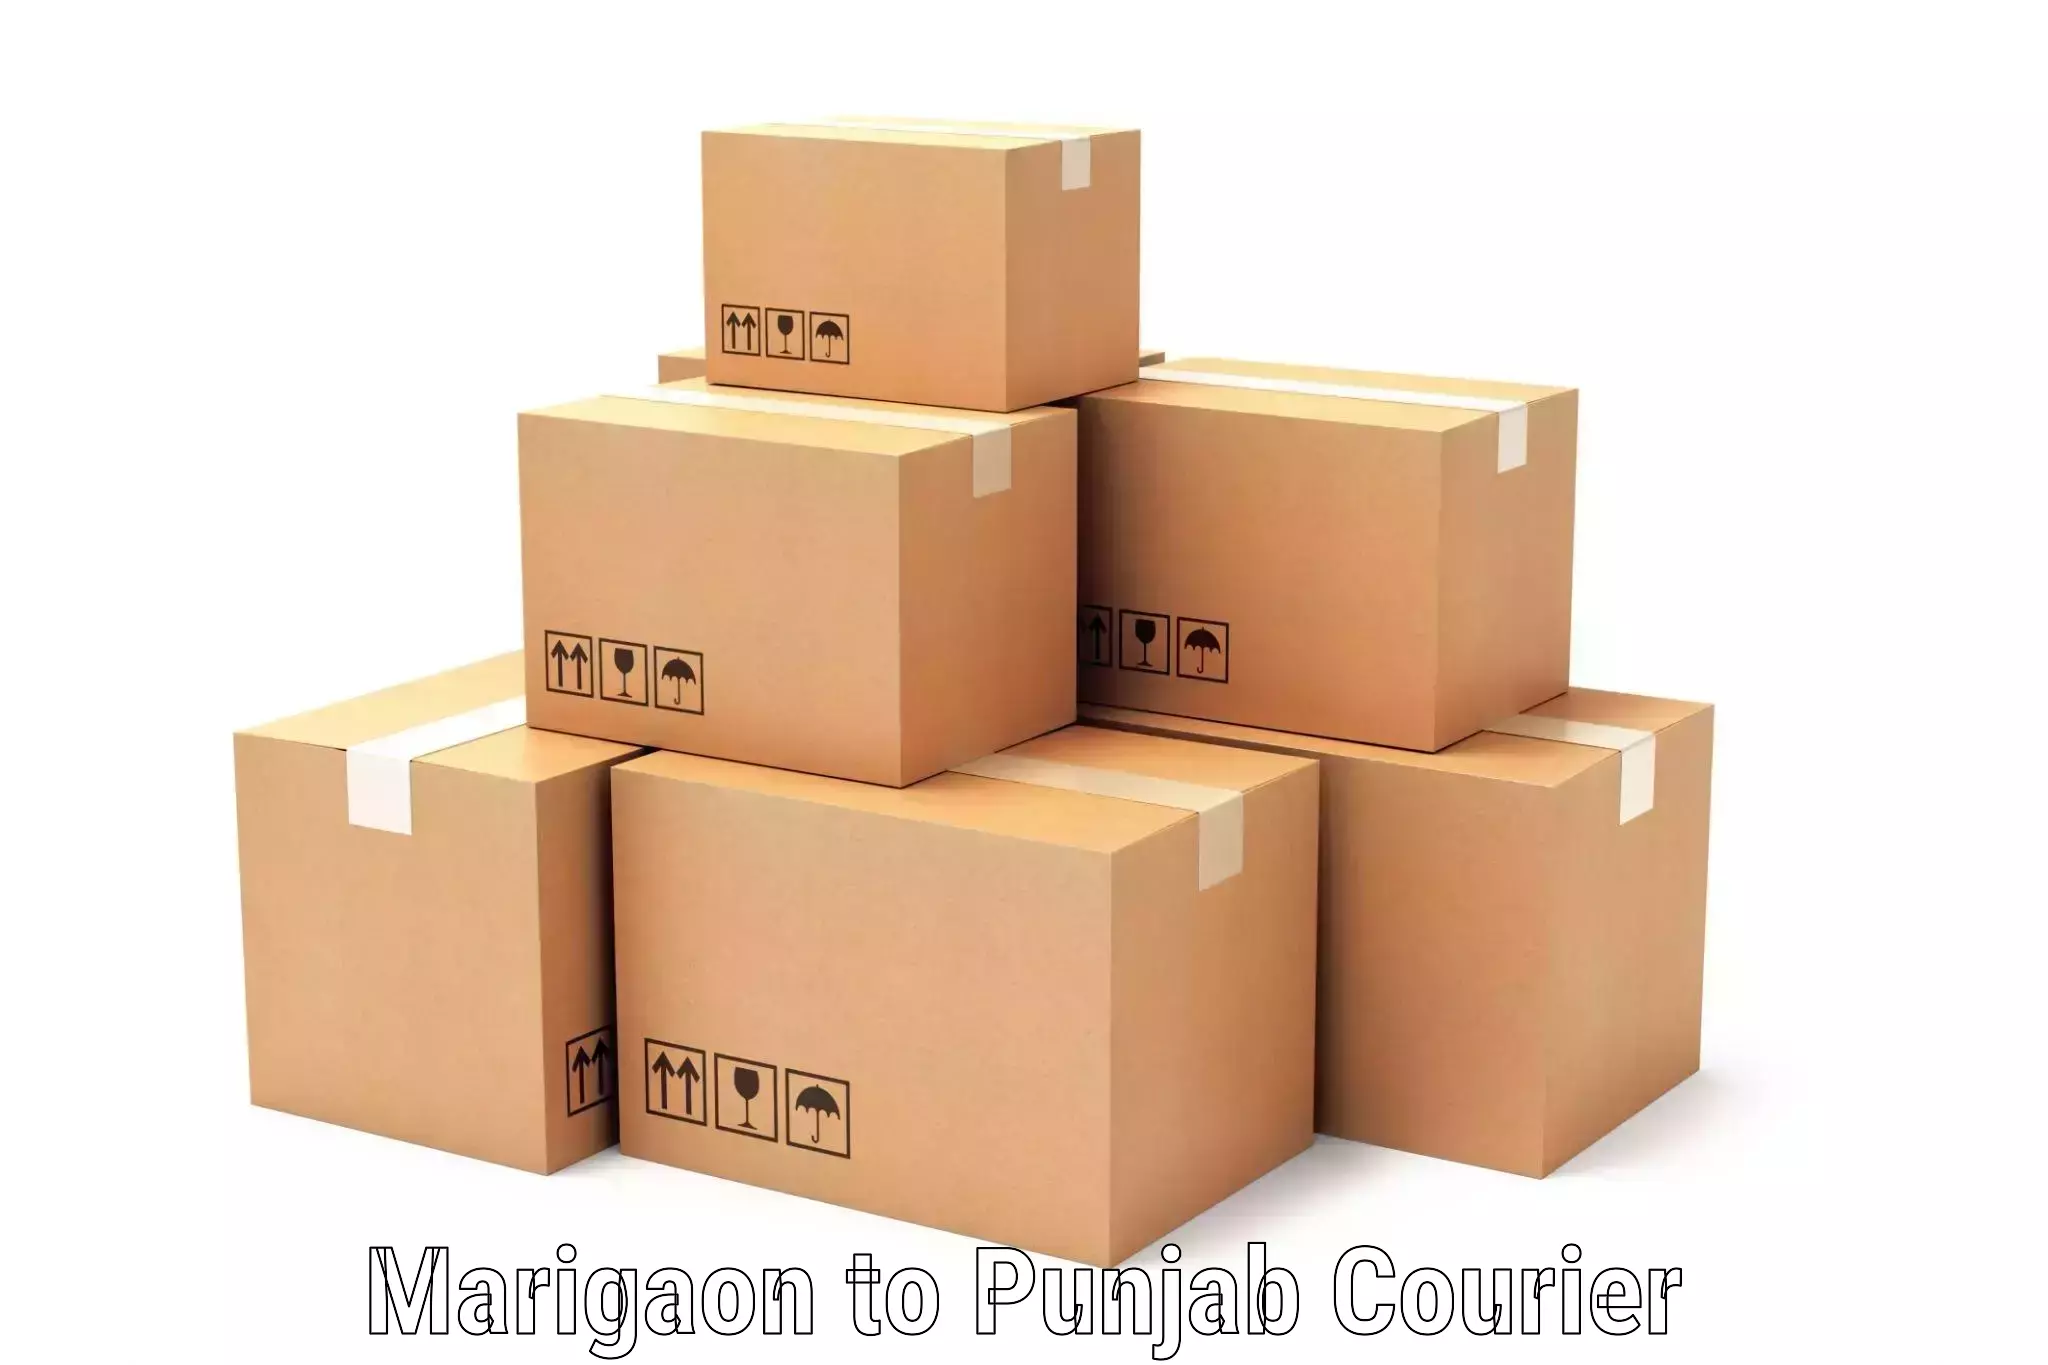 Customized shipping options Marigaon to Mohali